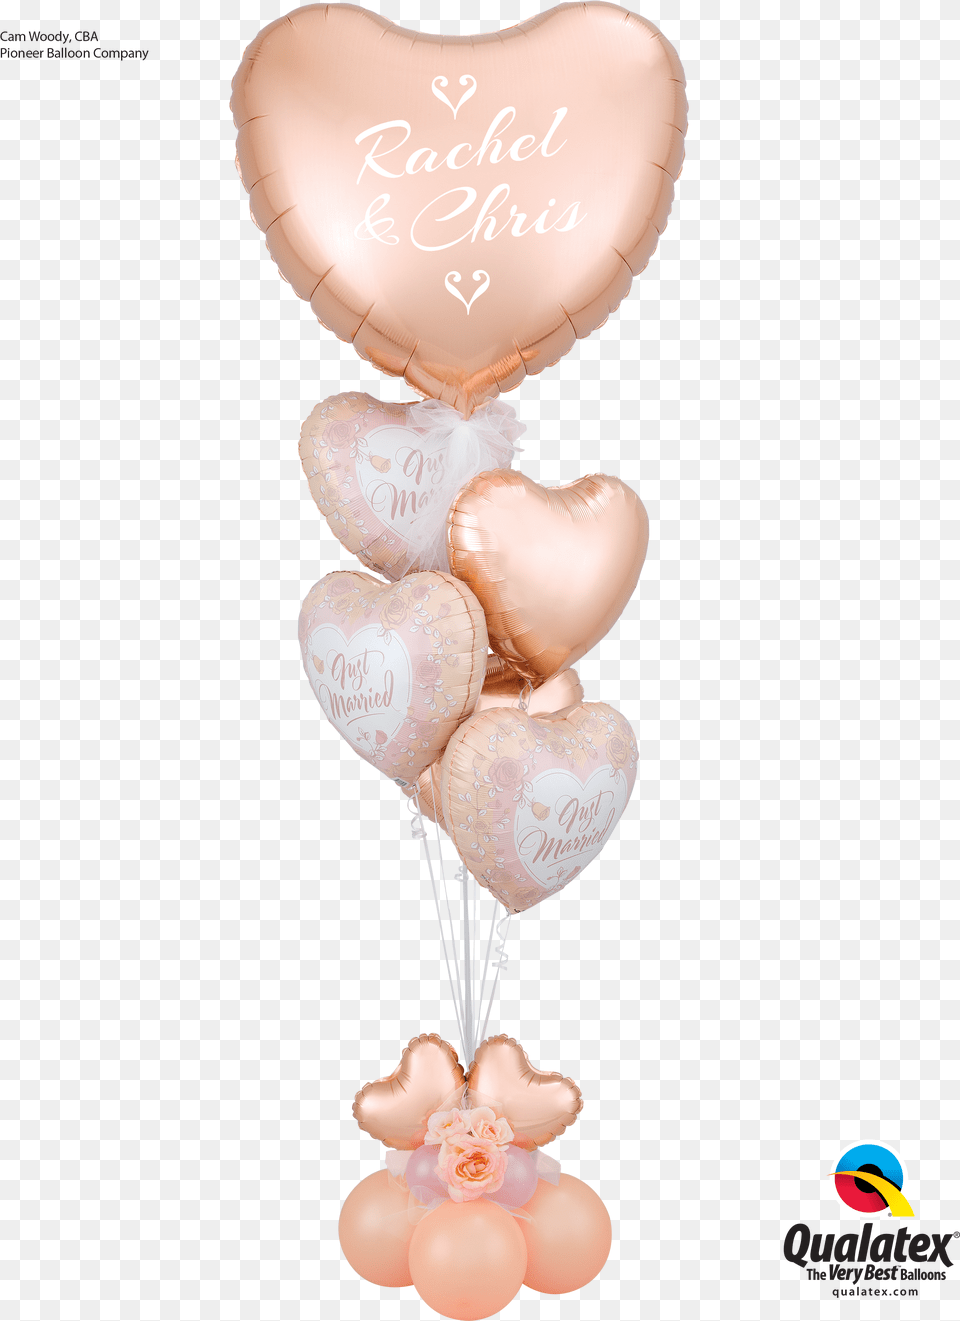 Heart, Balloon Png Image